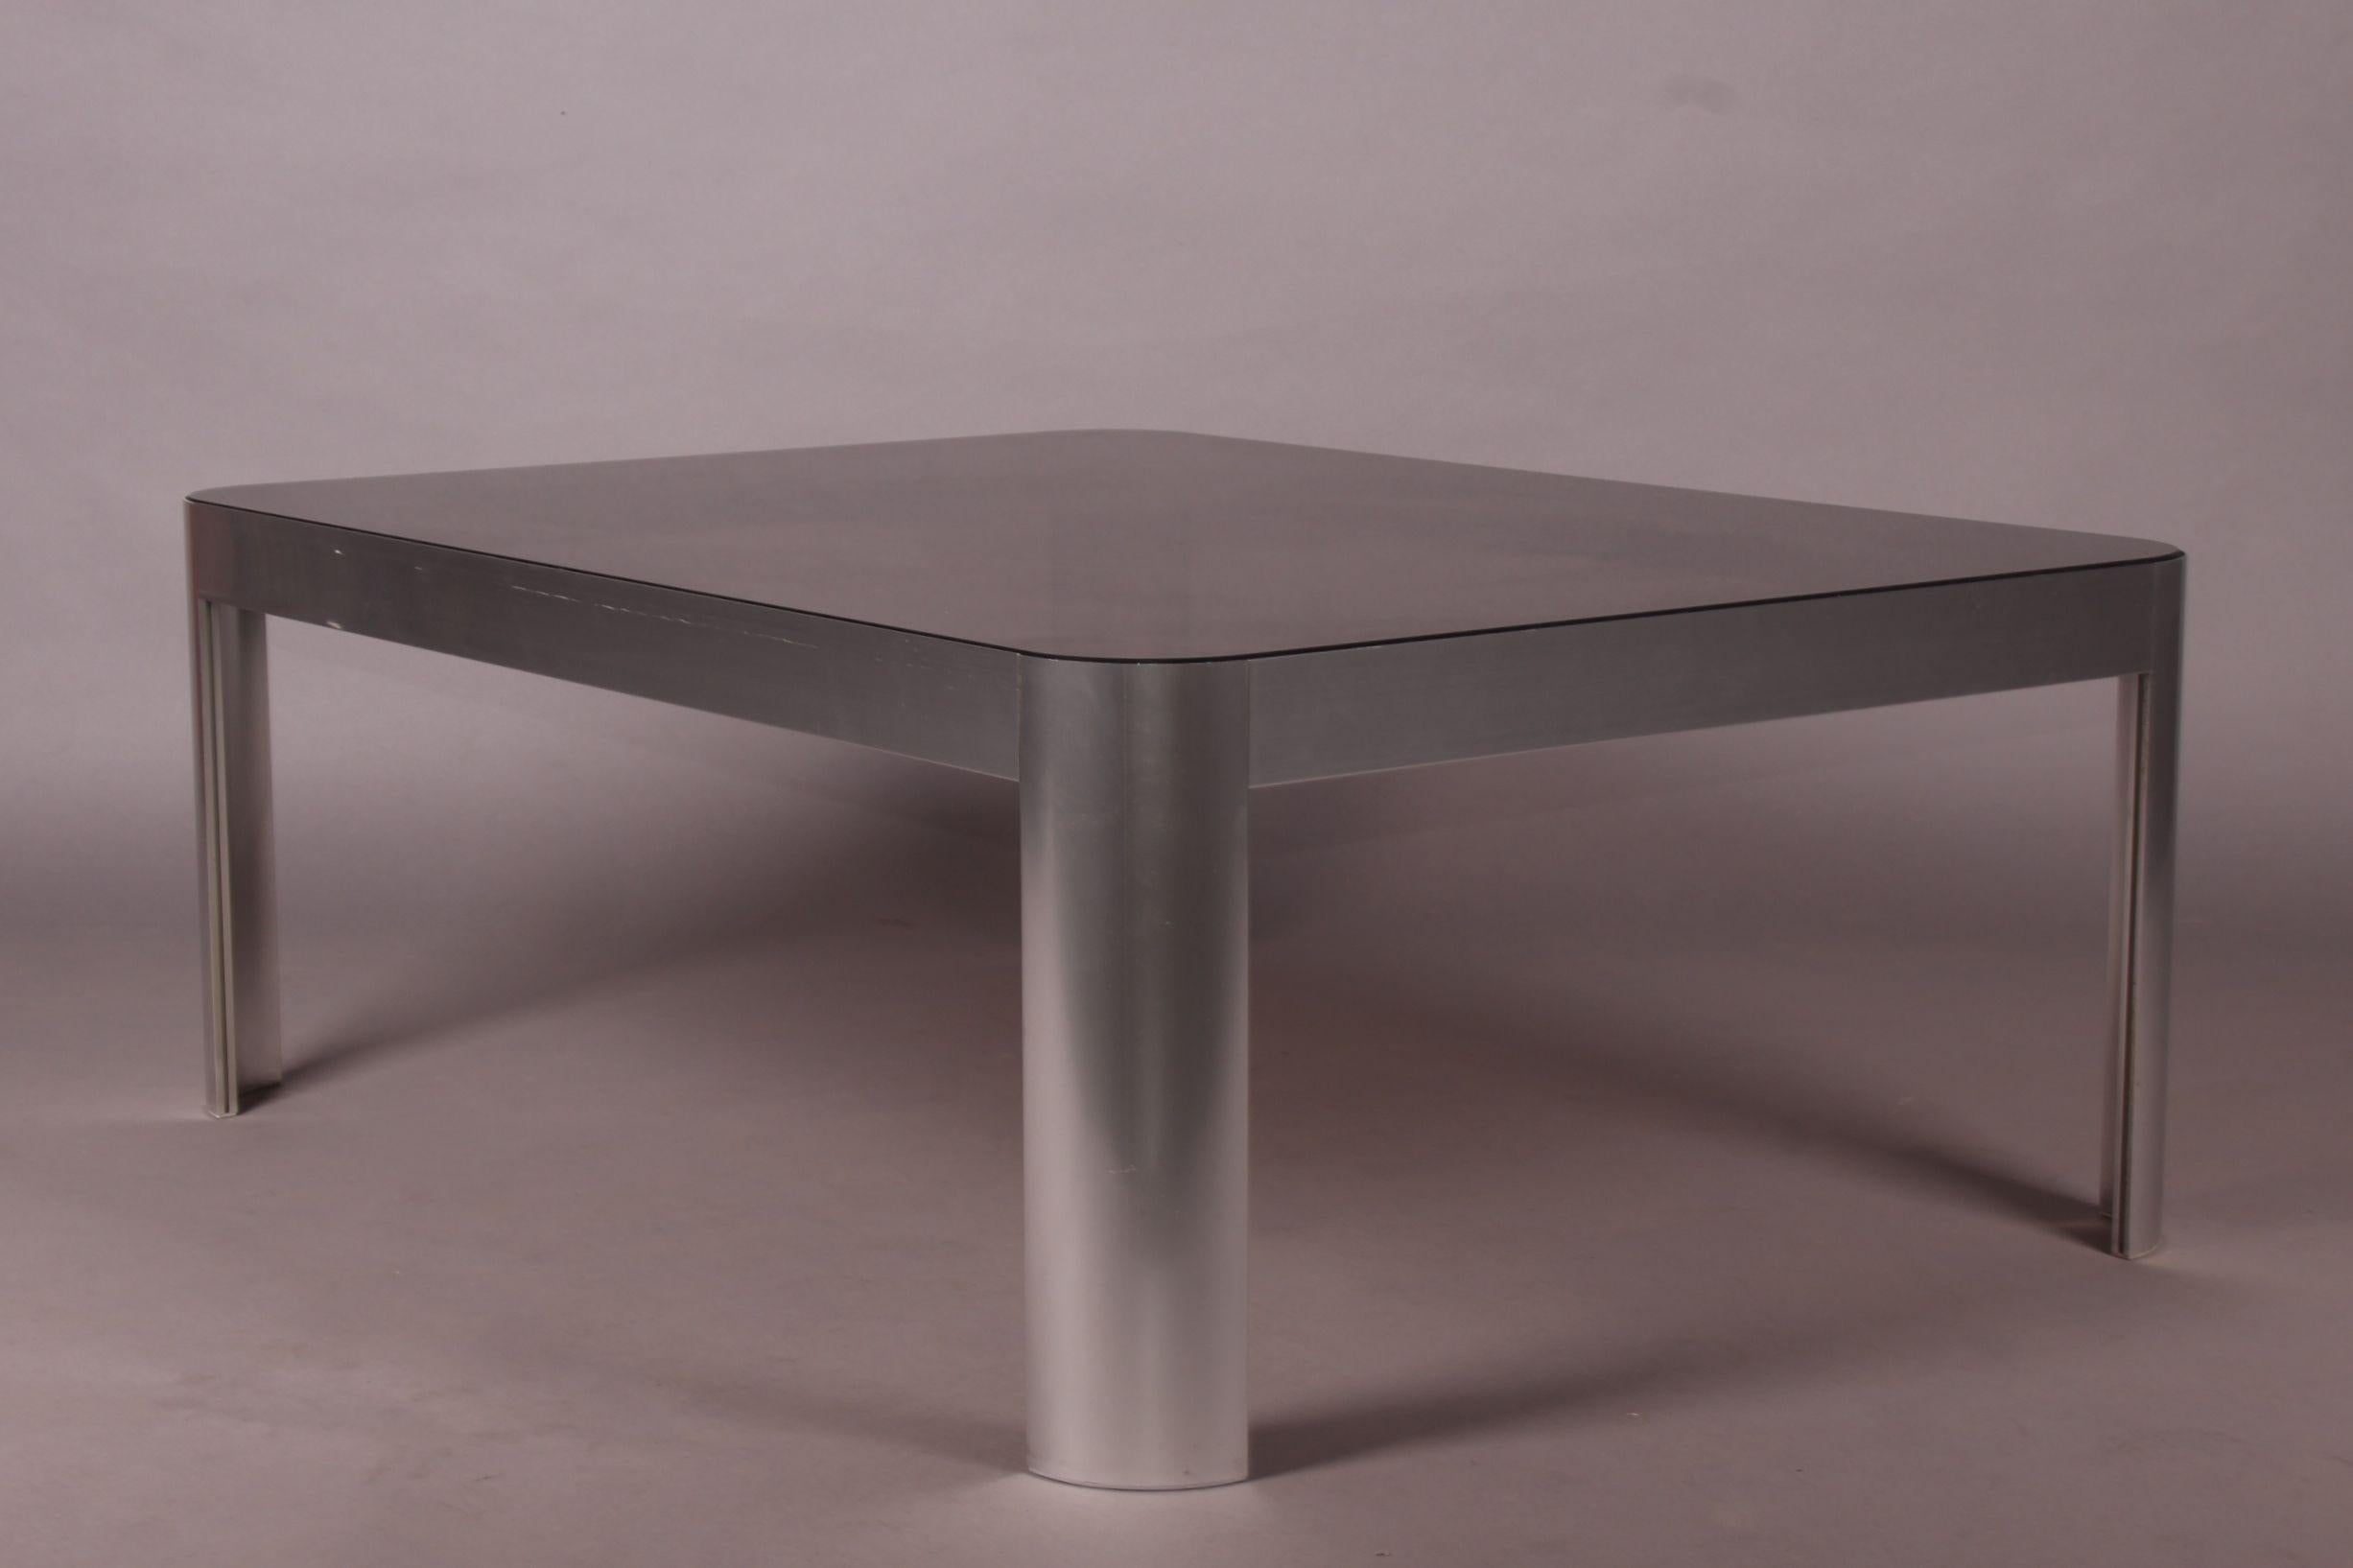 Aluminium and glass coffee table.